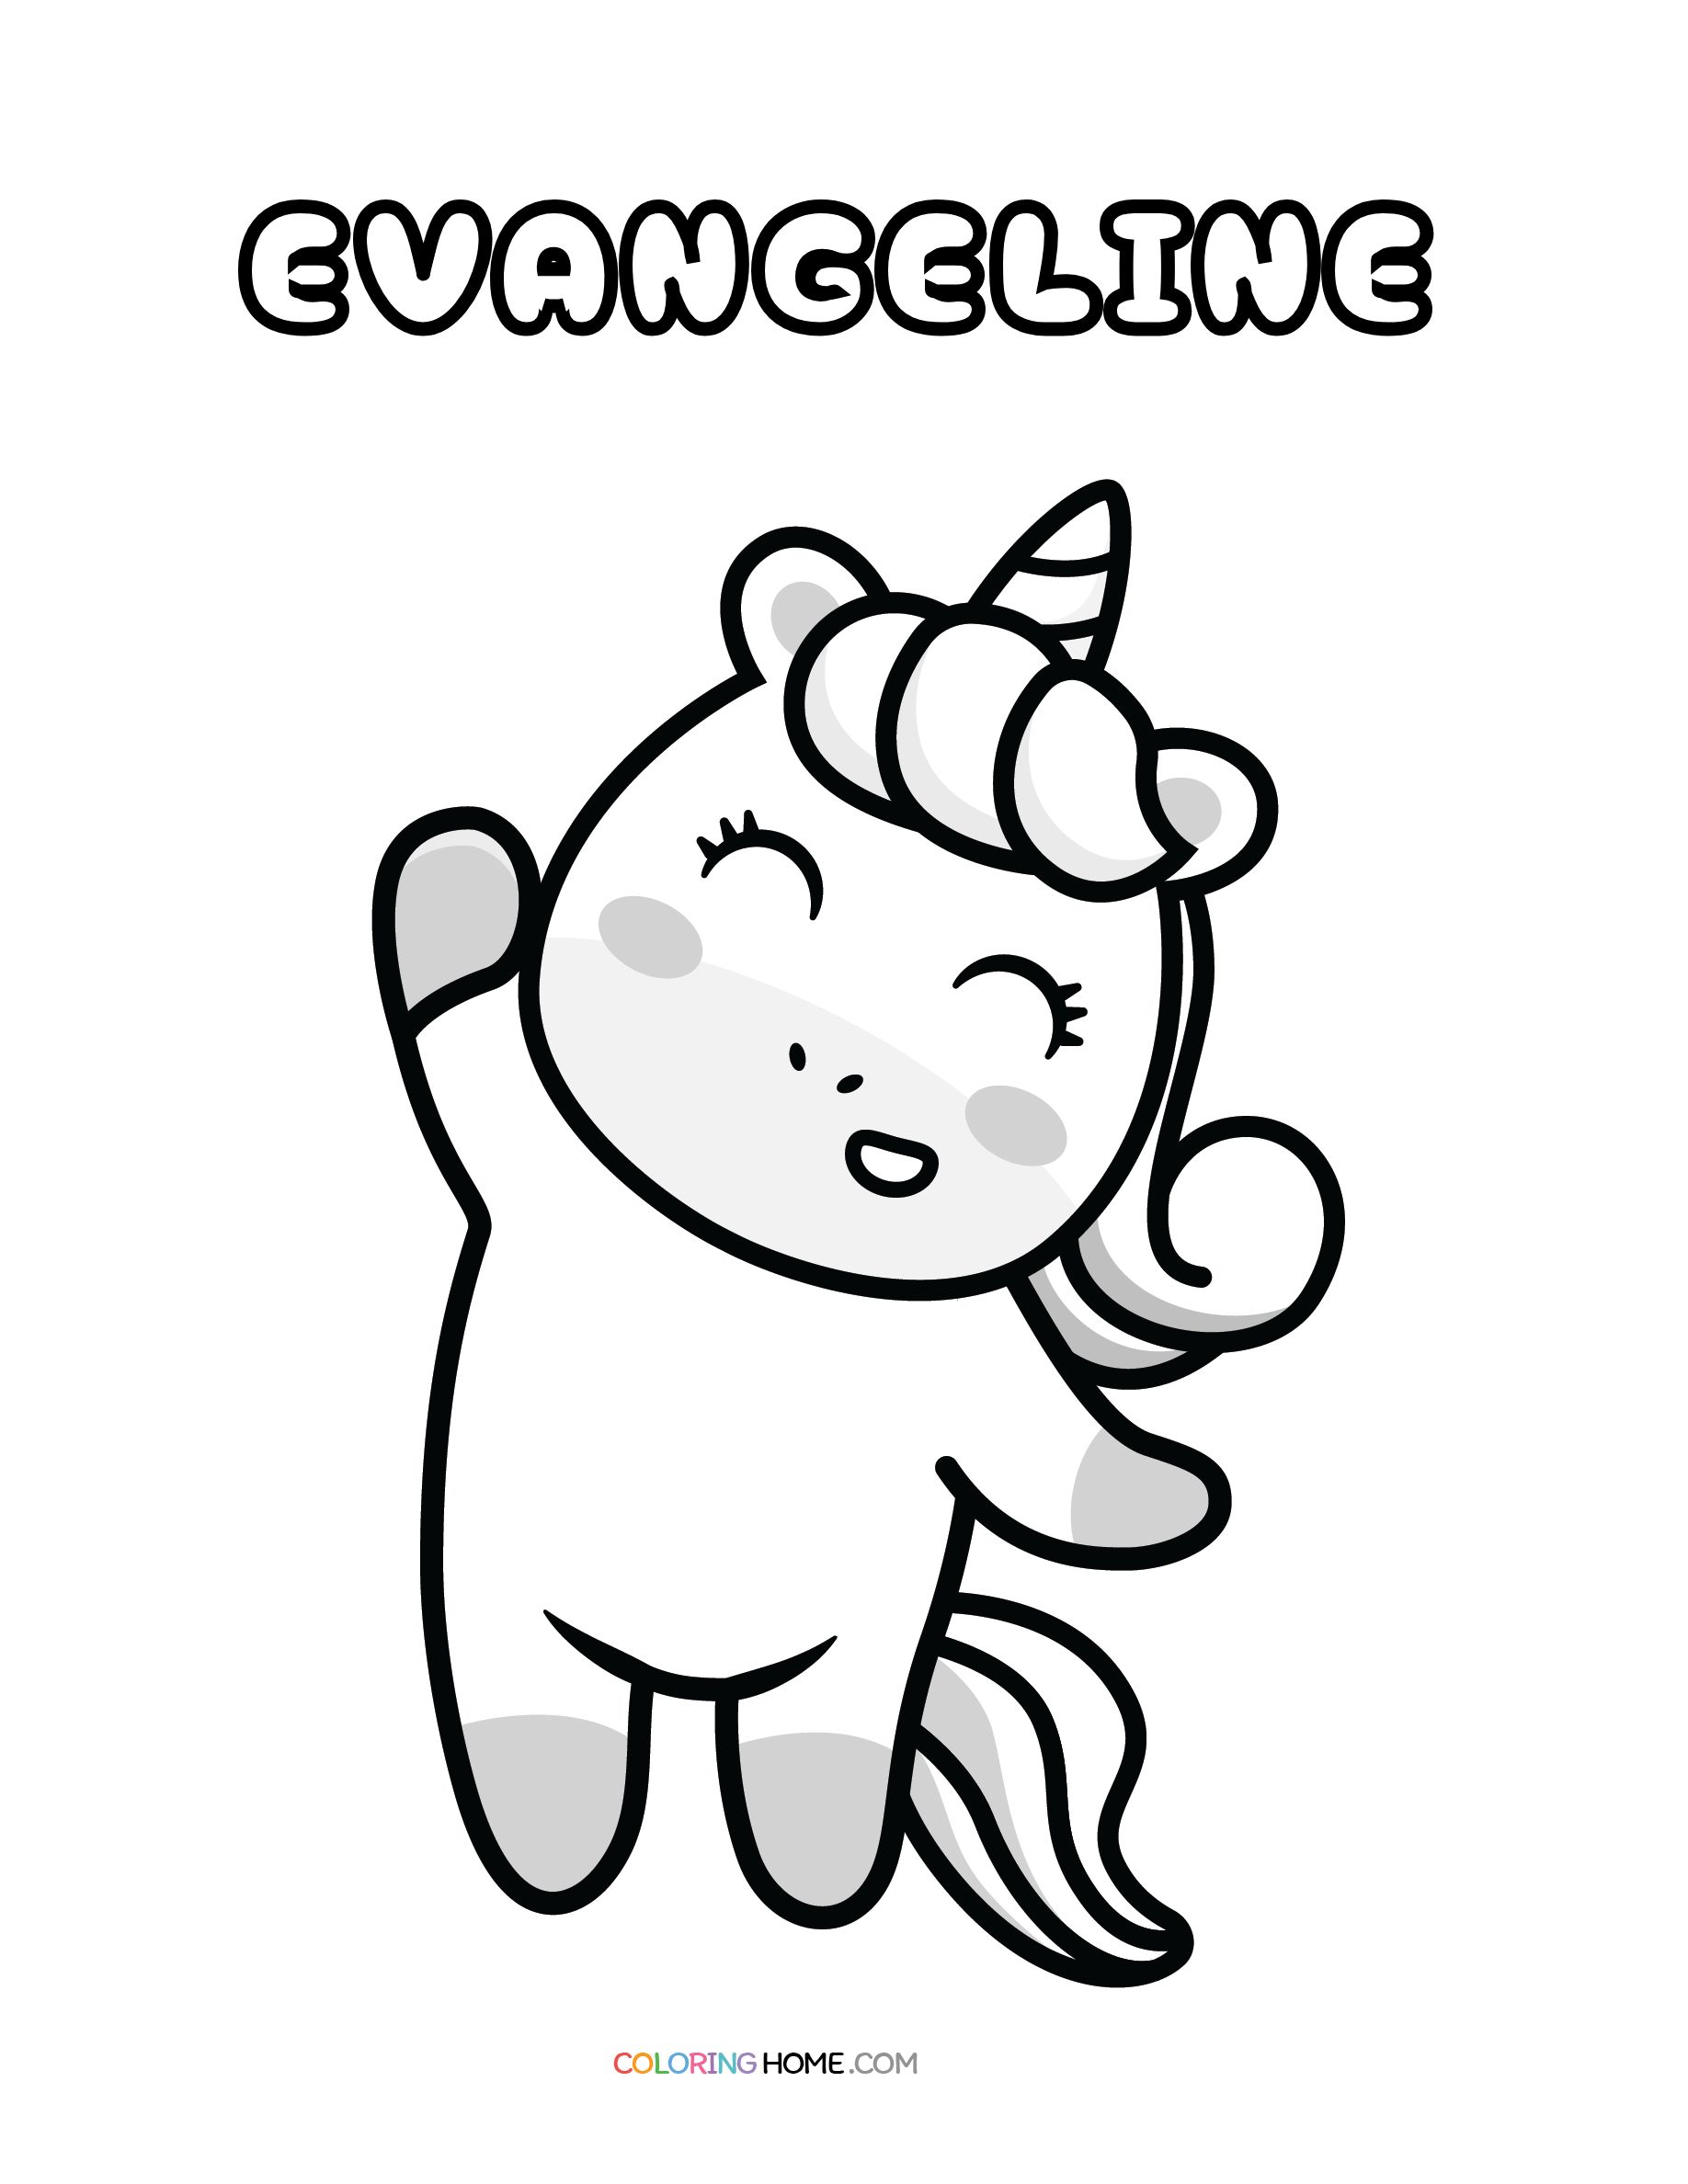 Evangeline unicorn coloring page